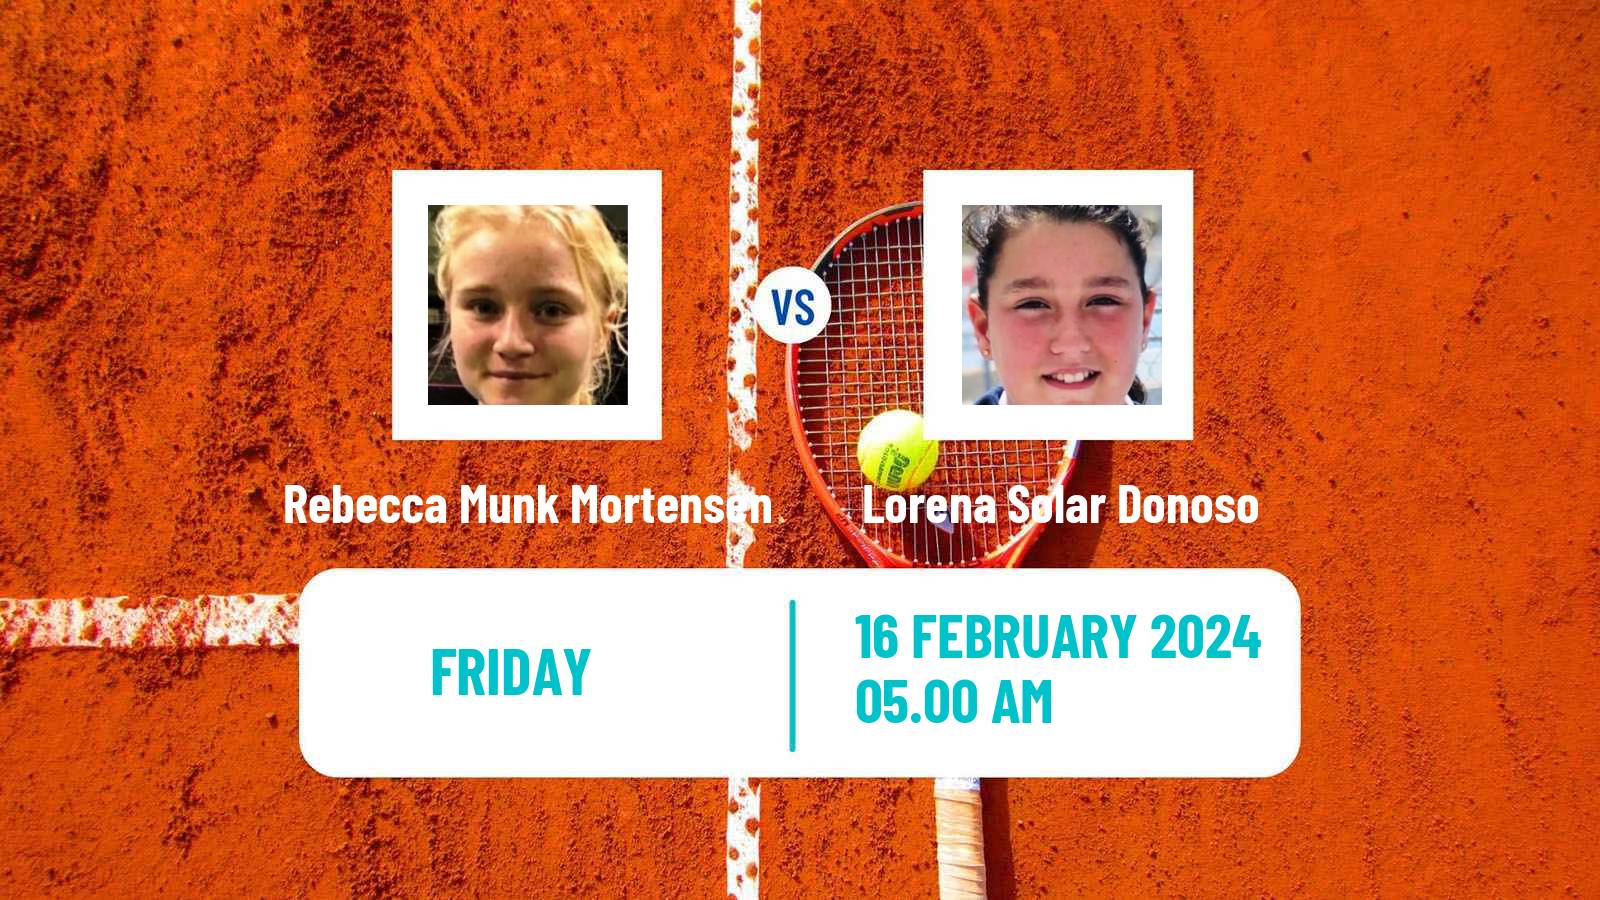 Tennis ITF W15 Manacor Women Rebecca Munk Mortensen - Lorena Solar Donoso